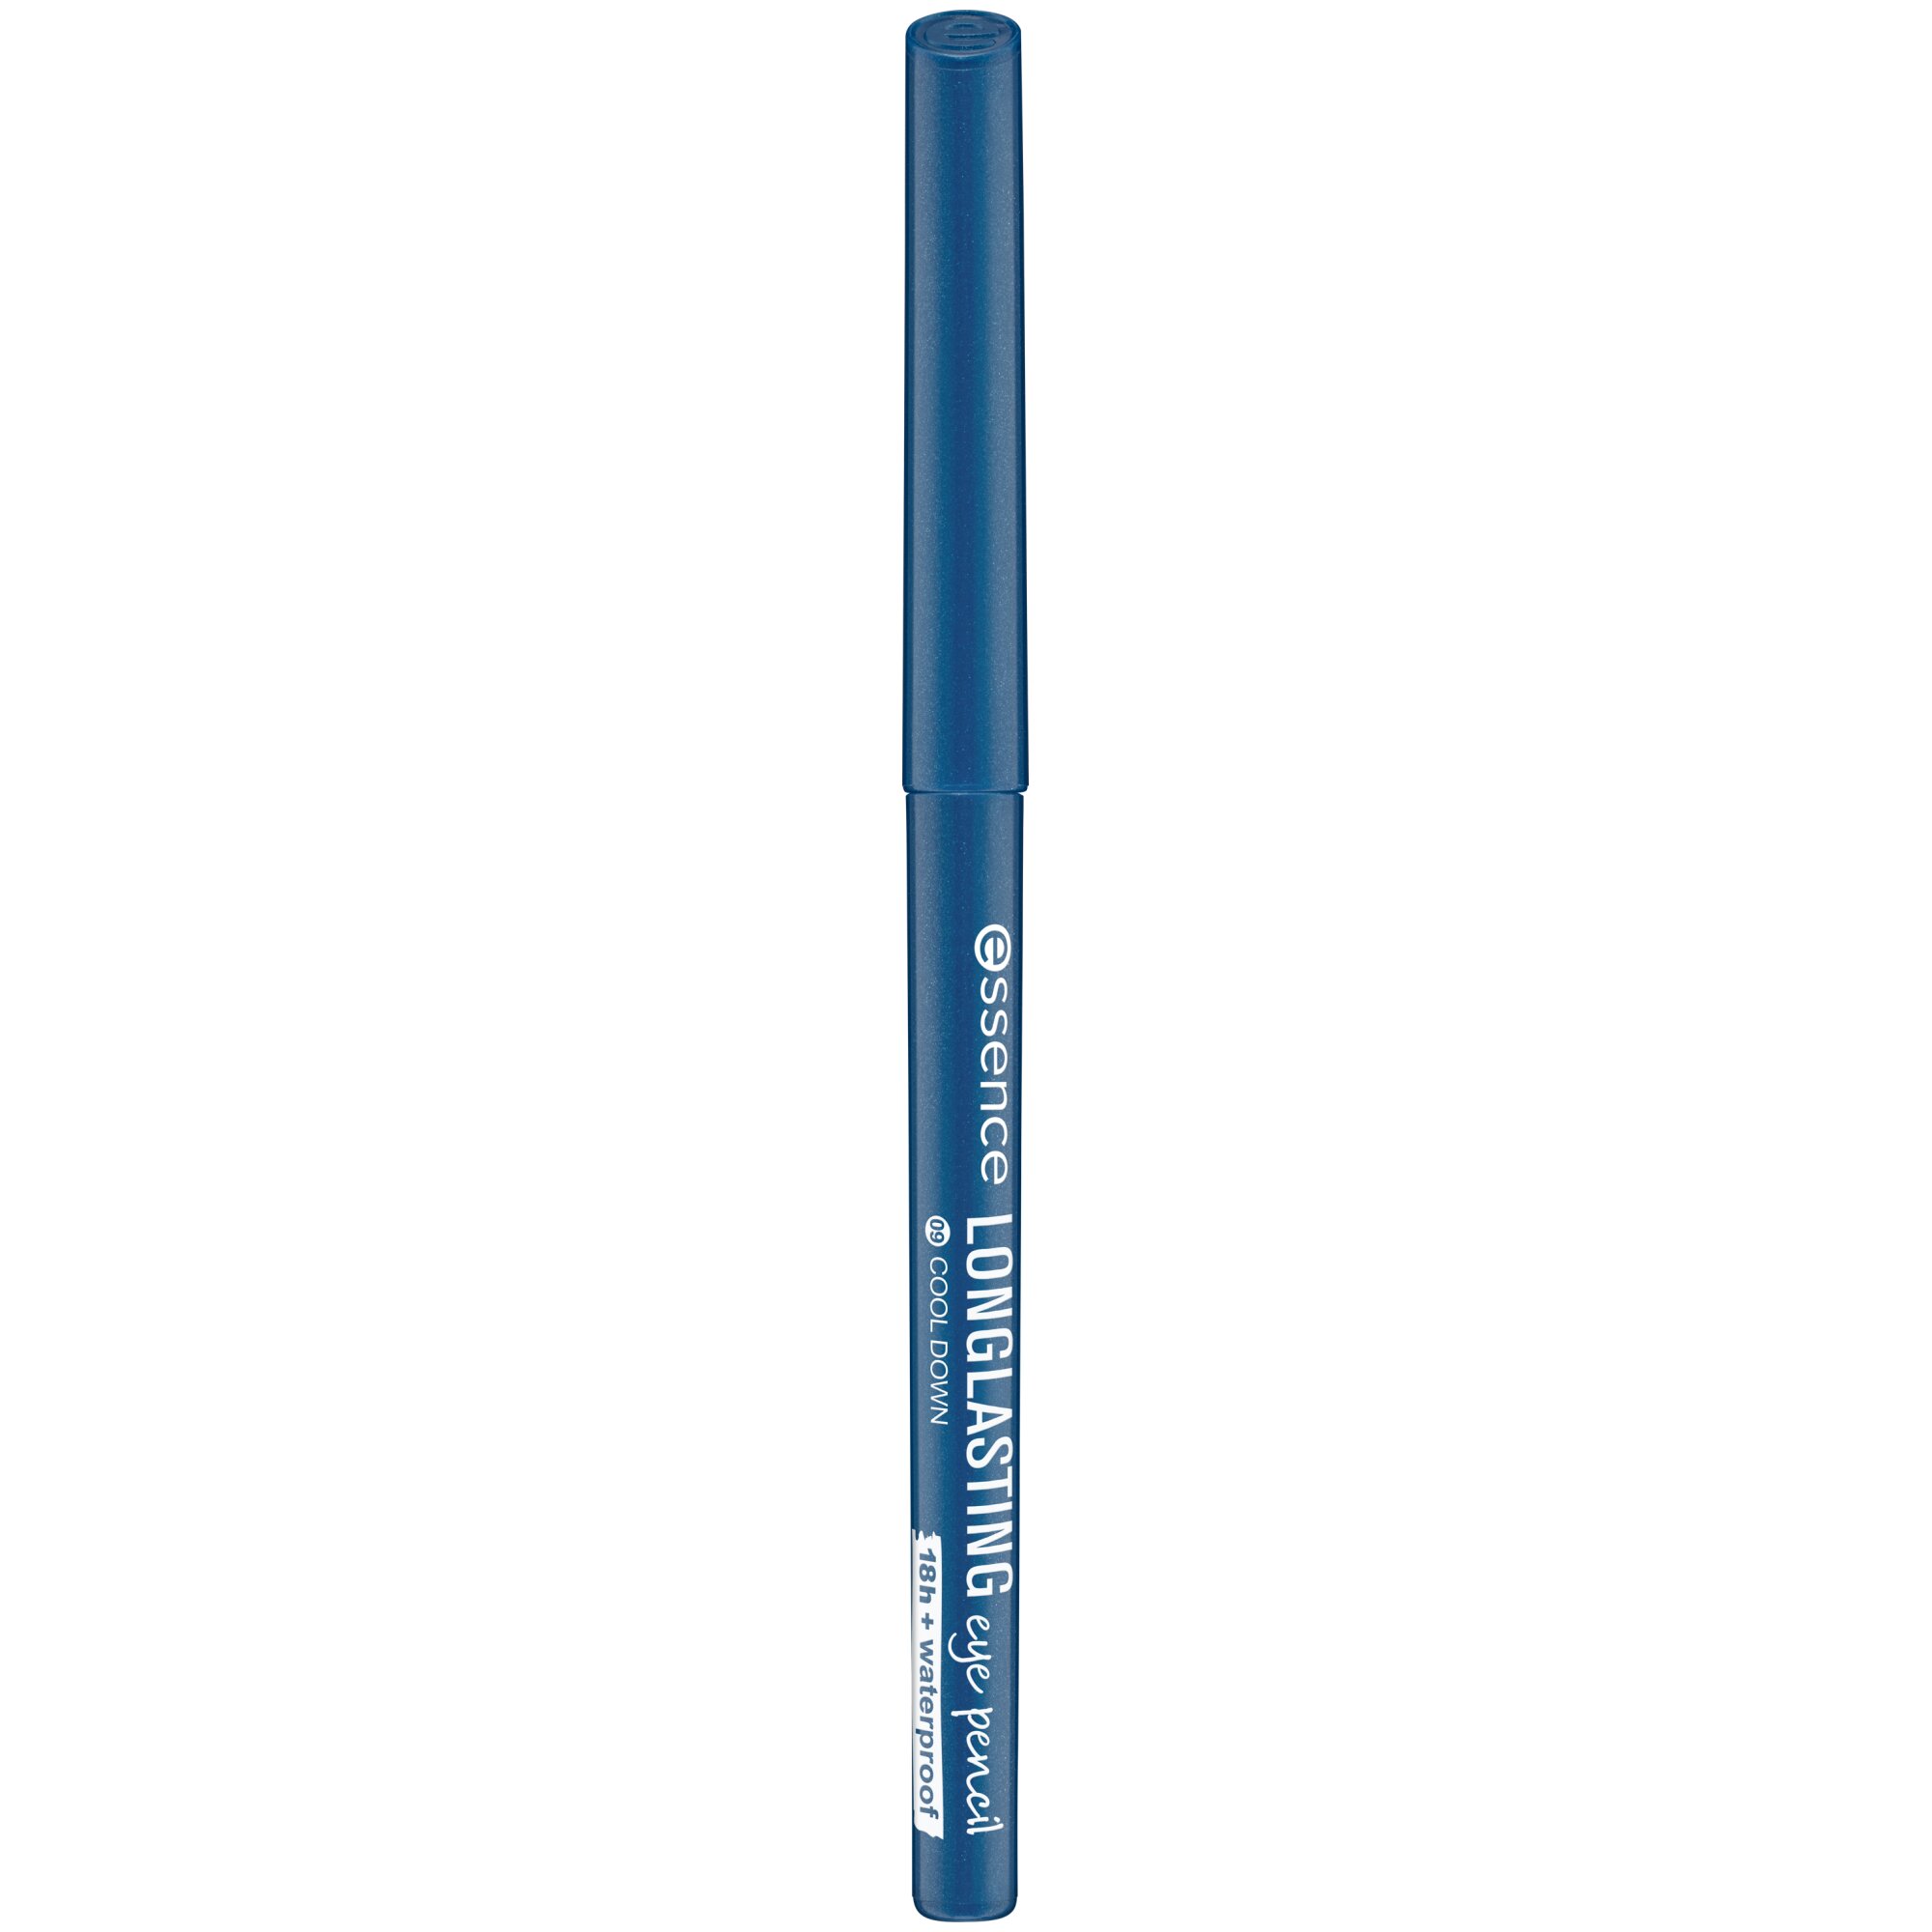 Creion pentru ochi Long-Lasting, 09 - Cool Down, 0.28 g, Essence